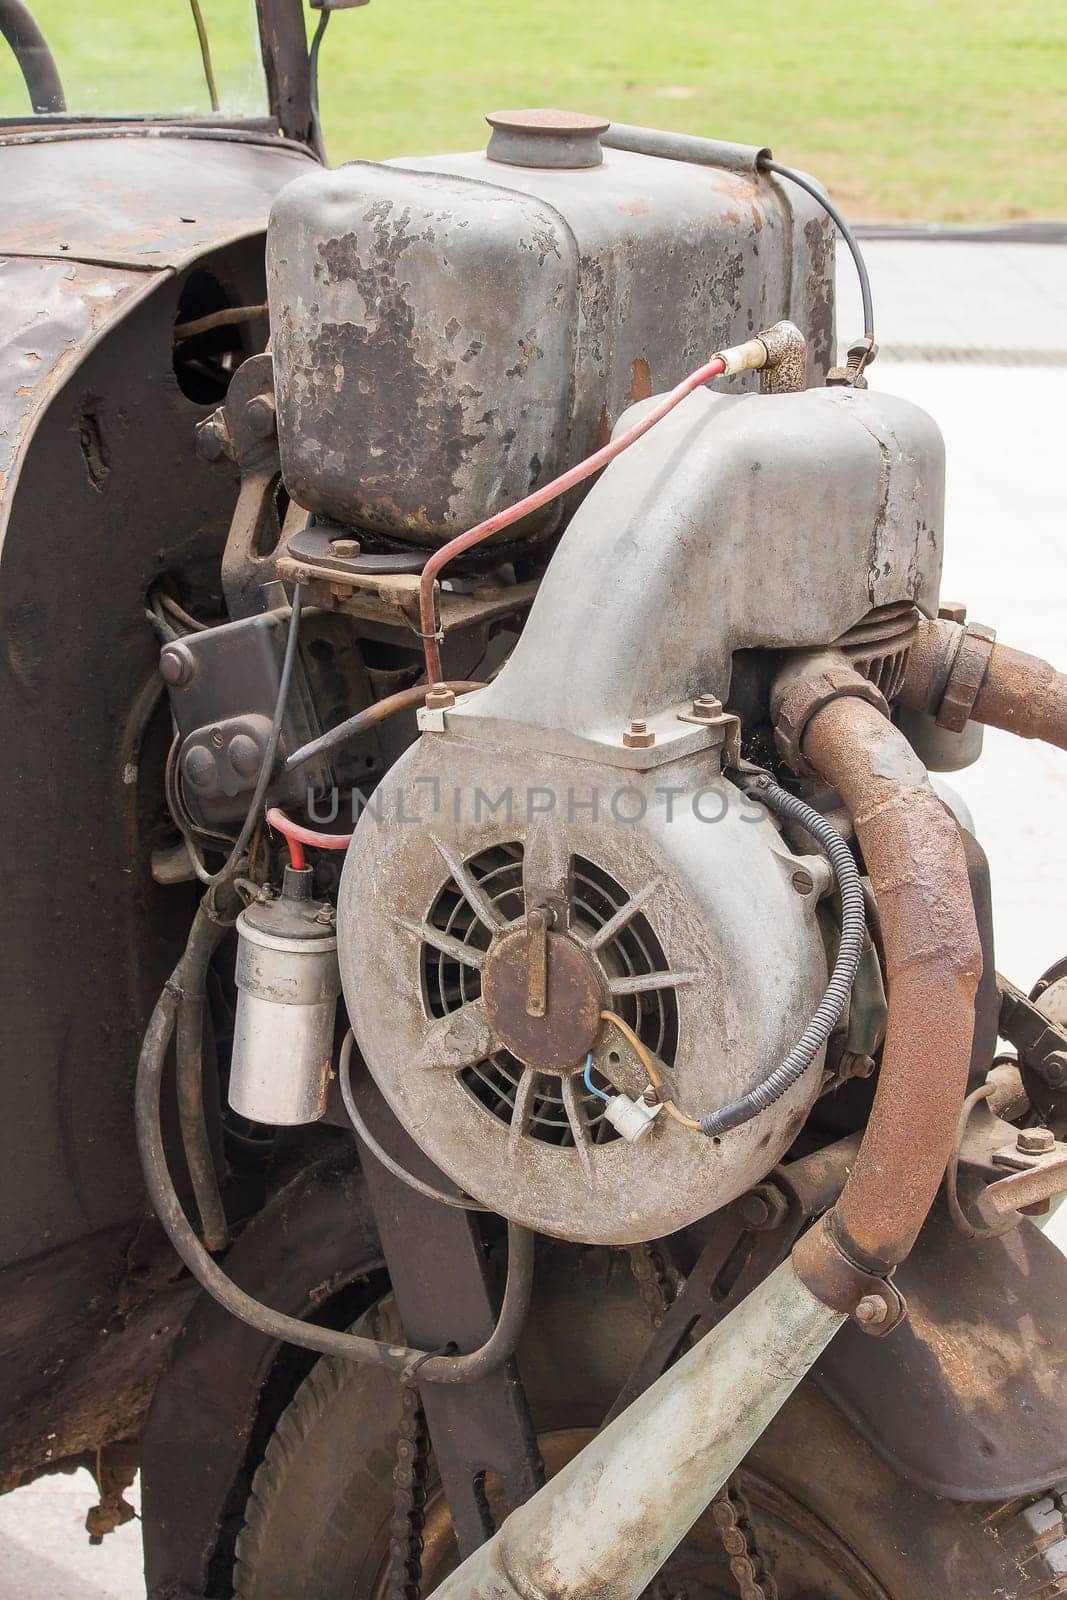 Vintage car engine on the front wheel.